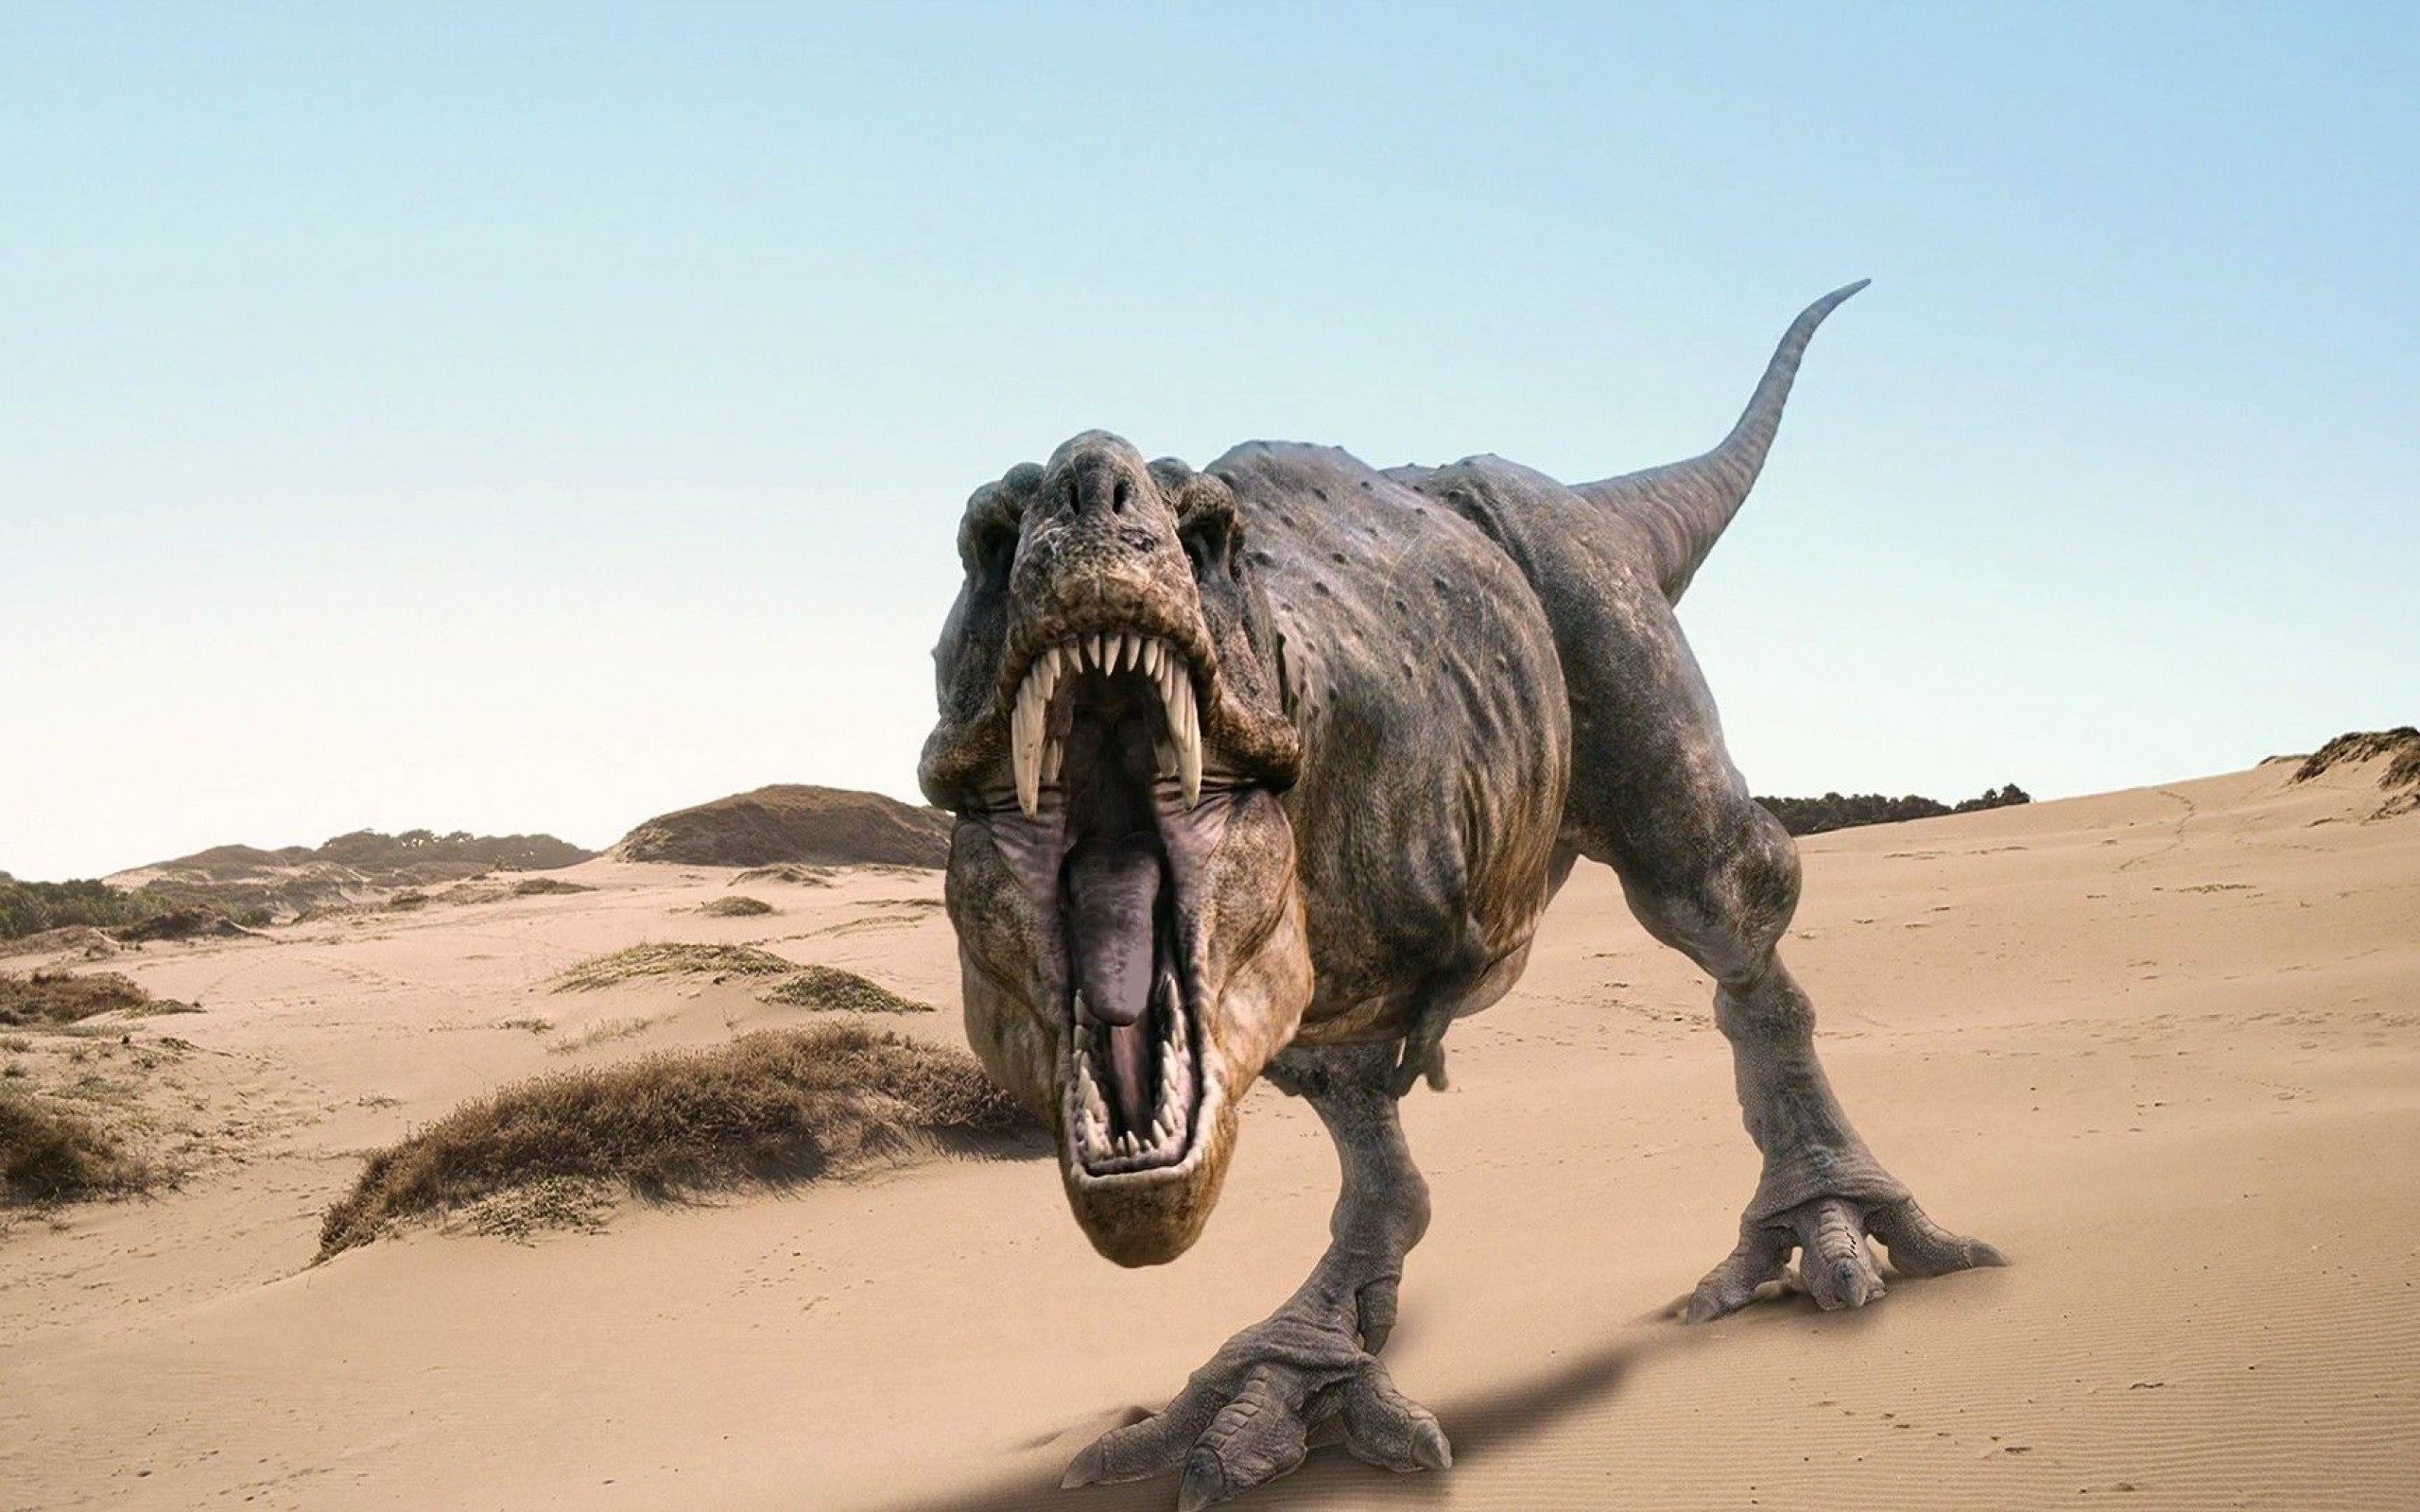 Tyrannosaurus rex wallpaper